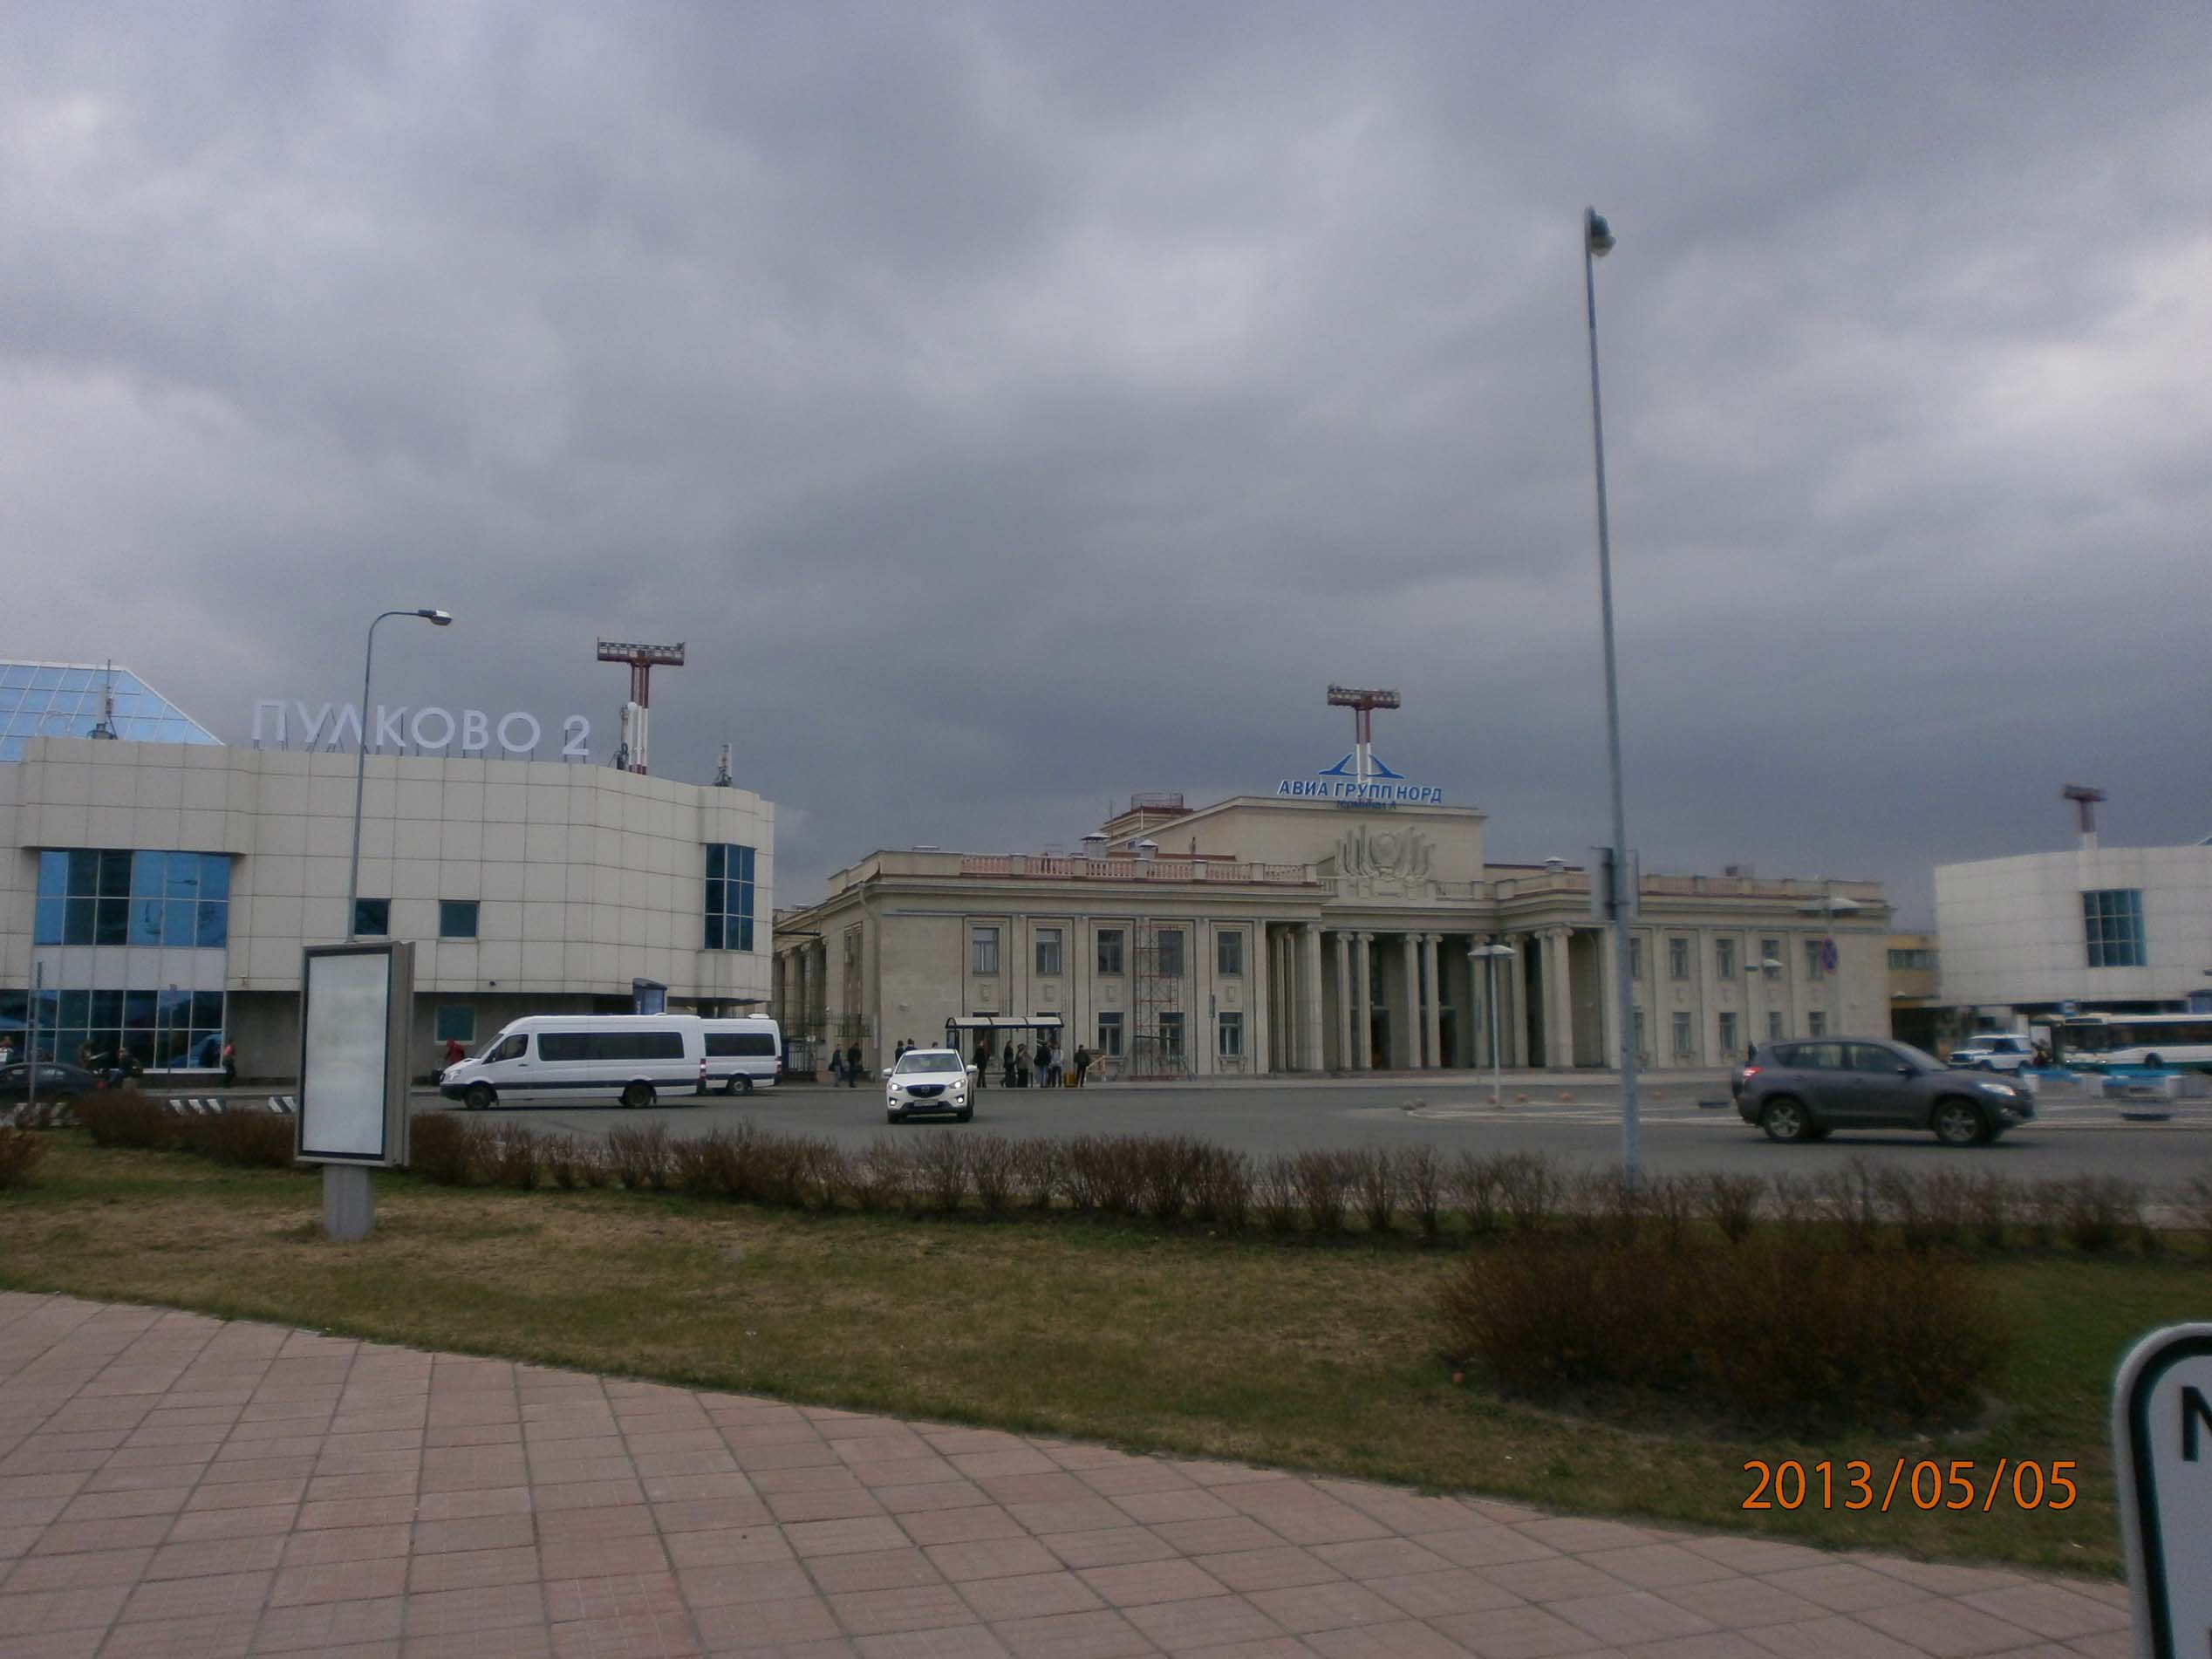 Pulkovo 2 airport